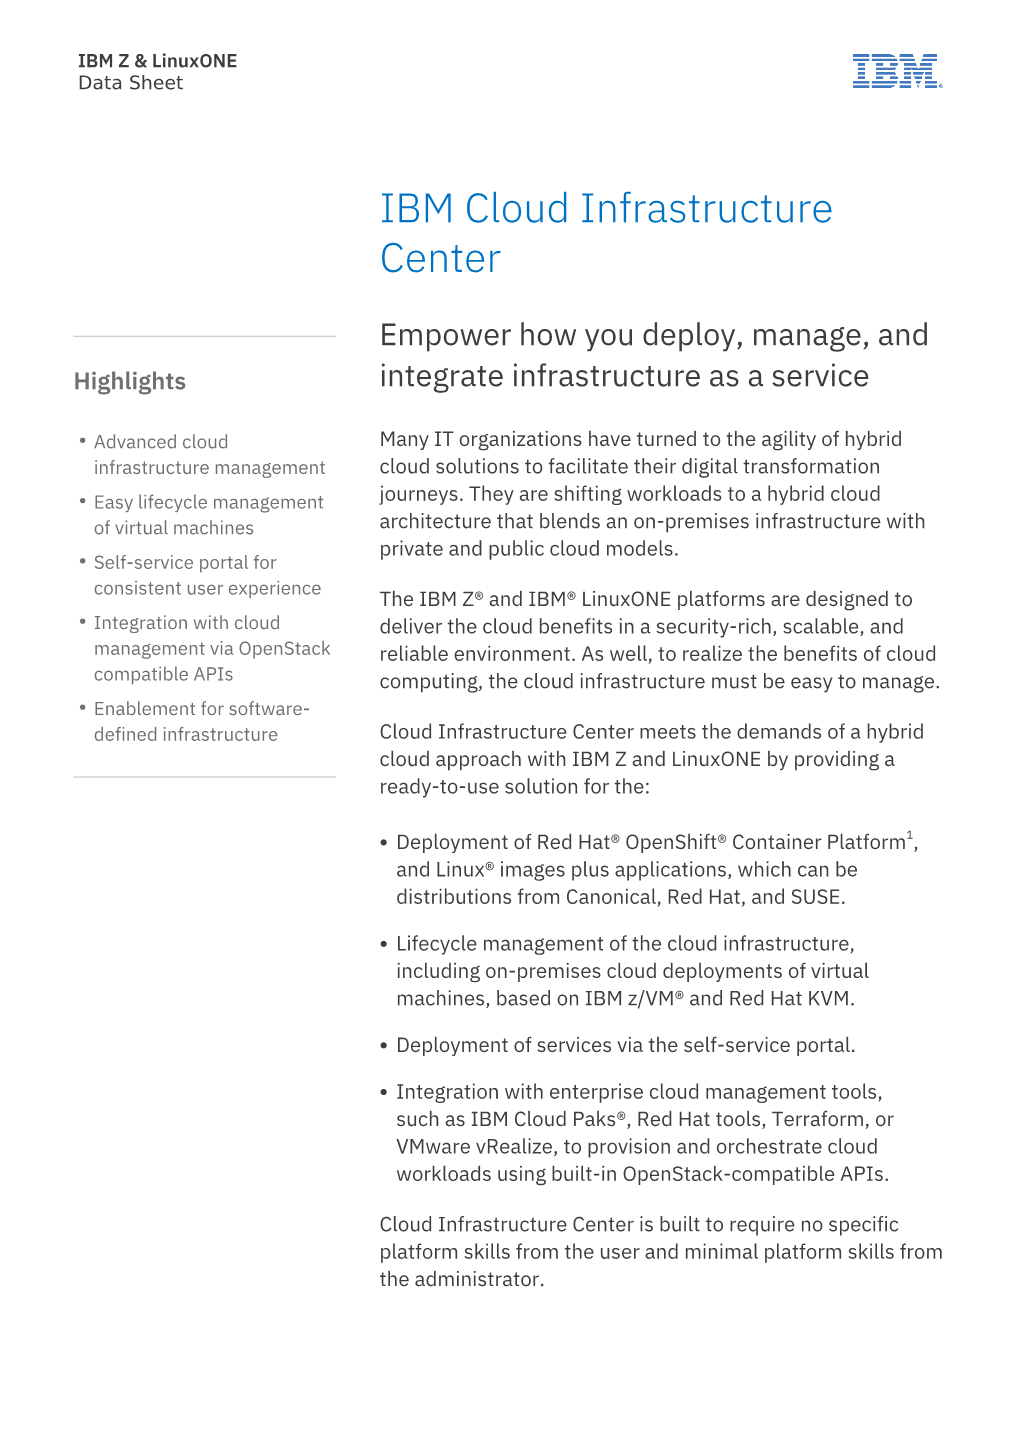 IBM Cloud Infrastructure Center